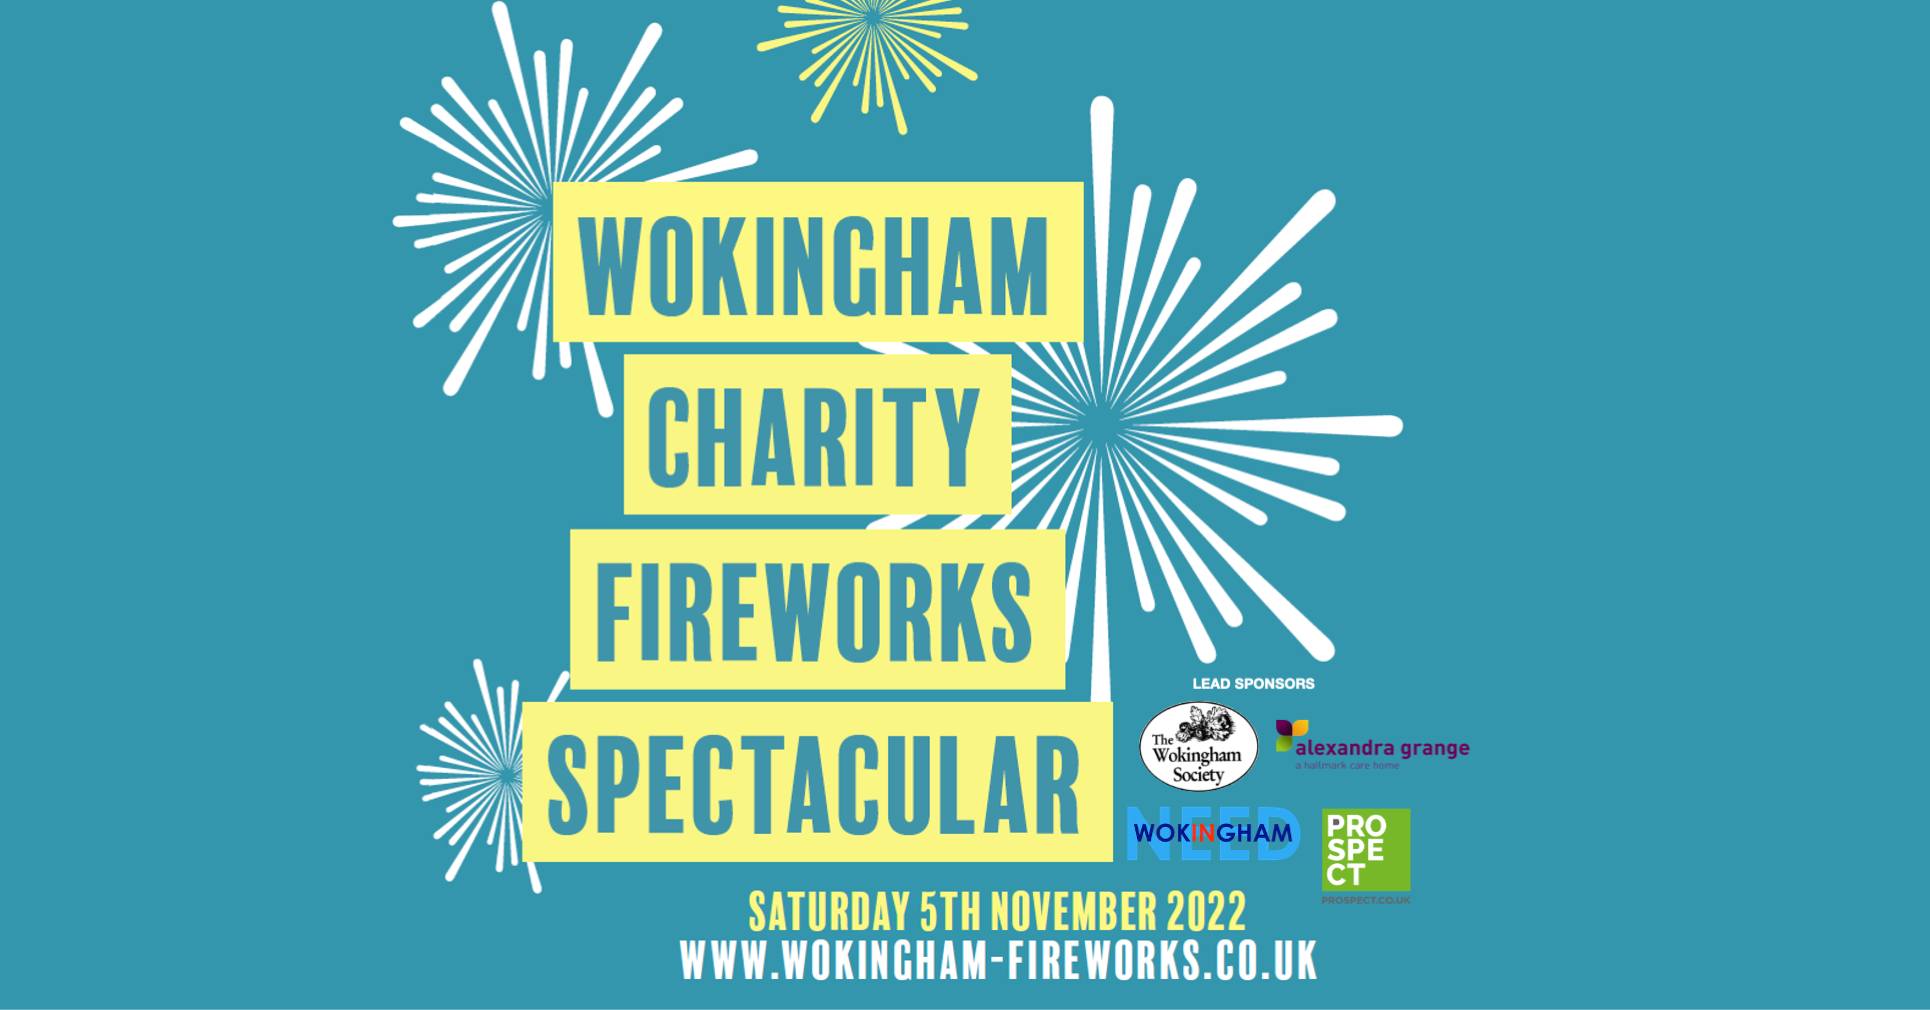 Wokingham Fireworks Spectactular